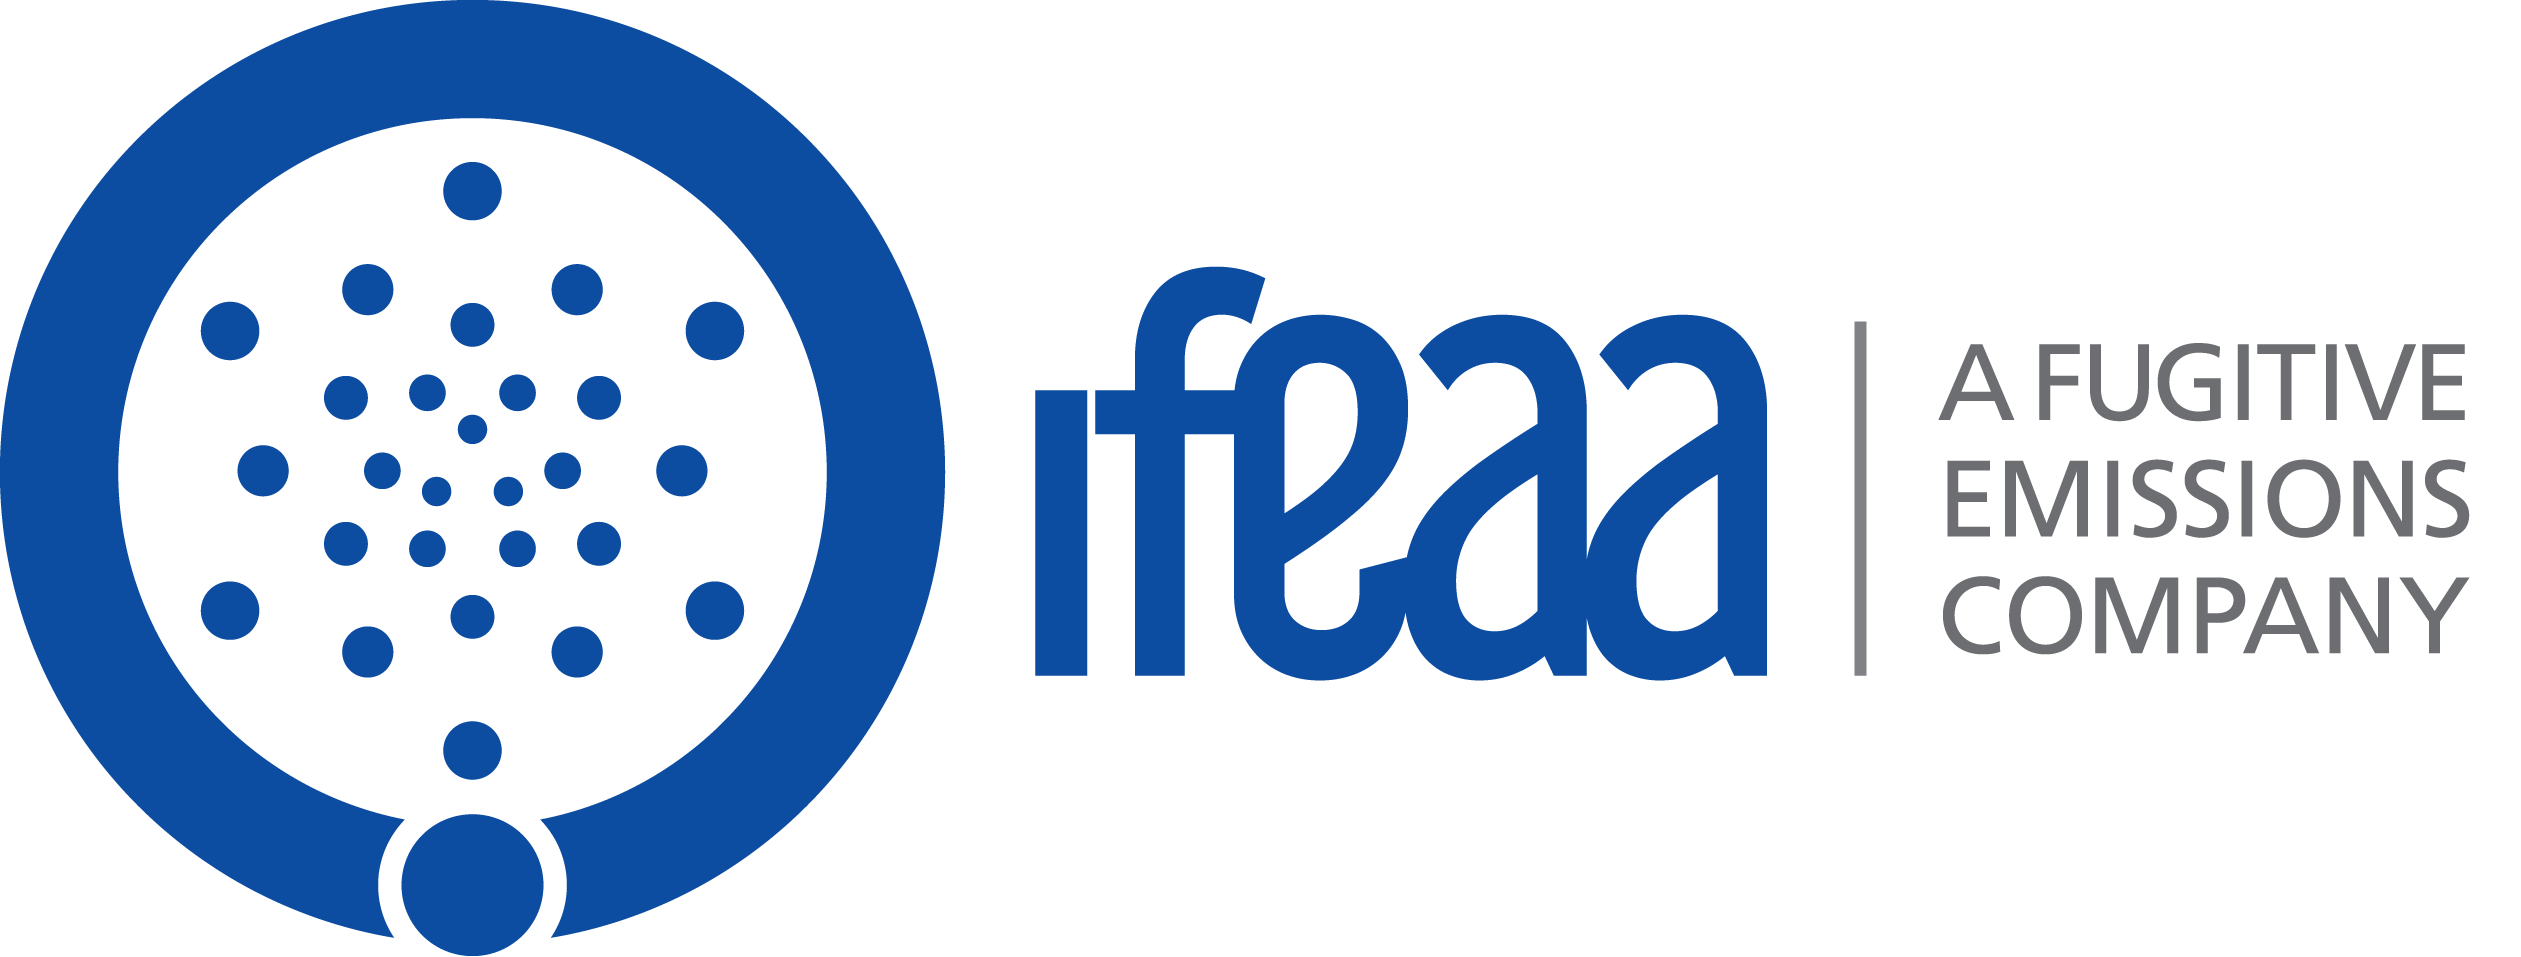 IFEAA - A Fugitive Emissions Company Logo